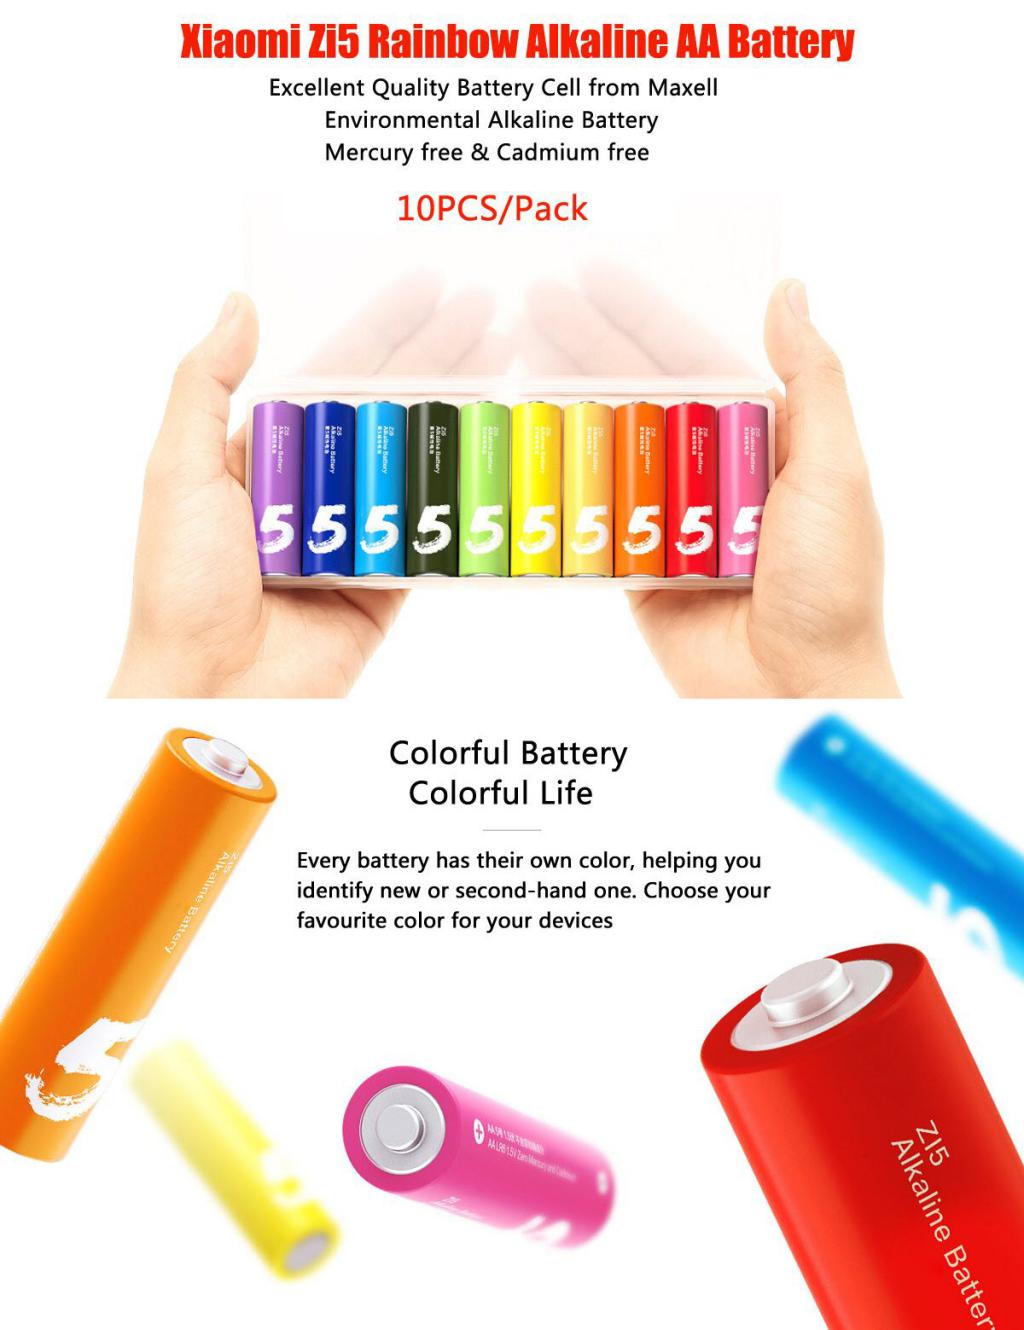 Xiaomi Zi5 Rainbow 1 5v Aa Alkaline Battery Set 10pcs (1)